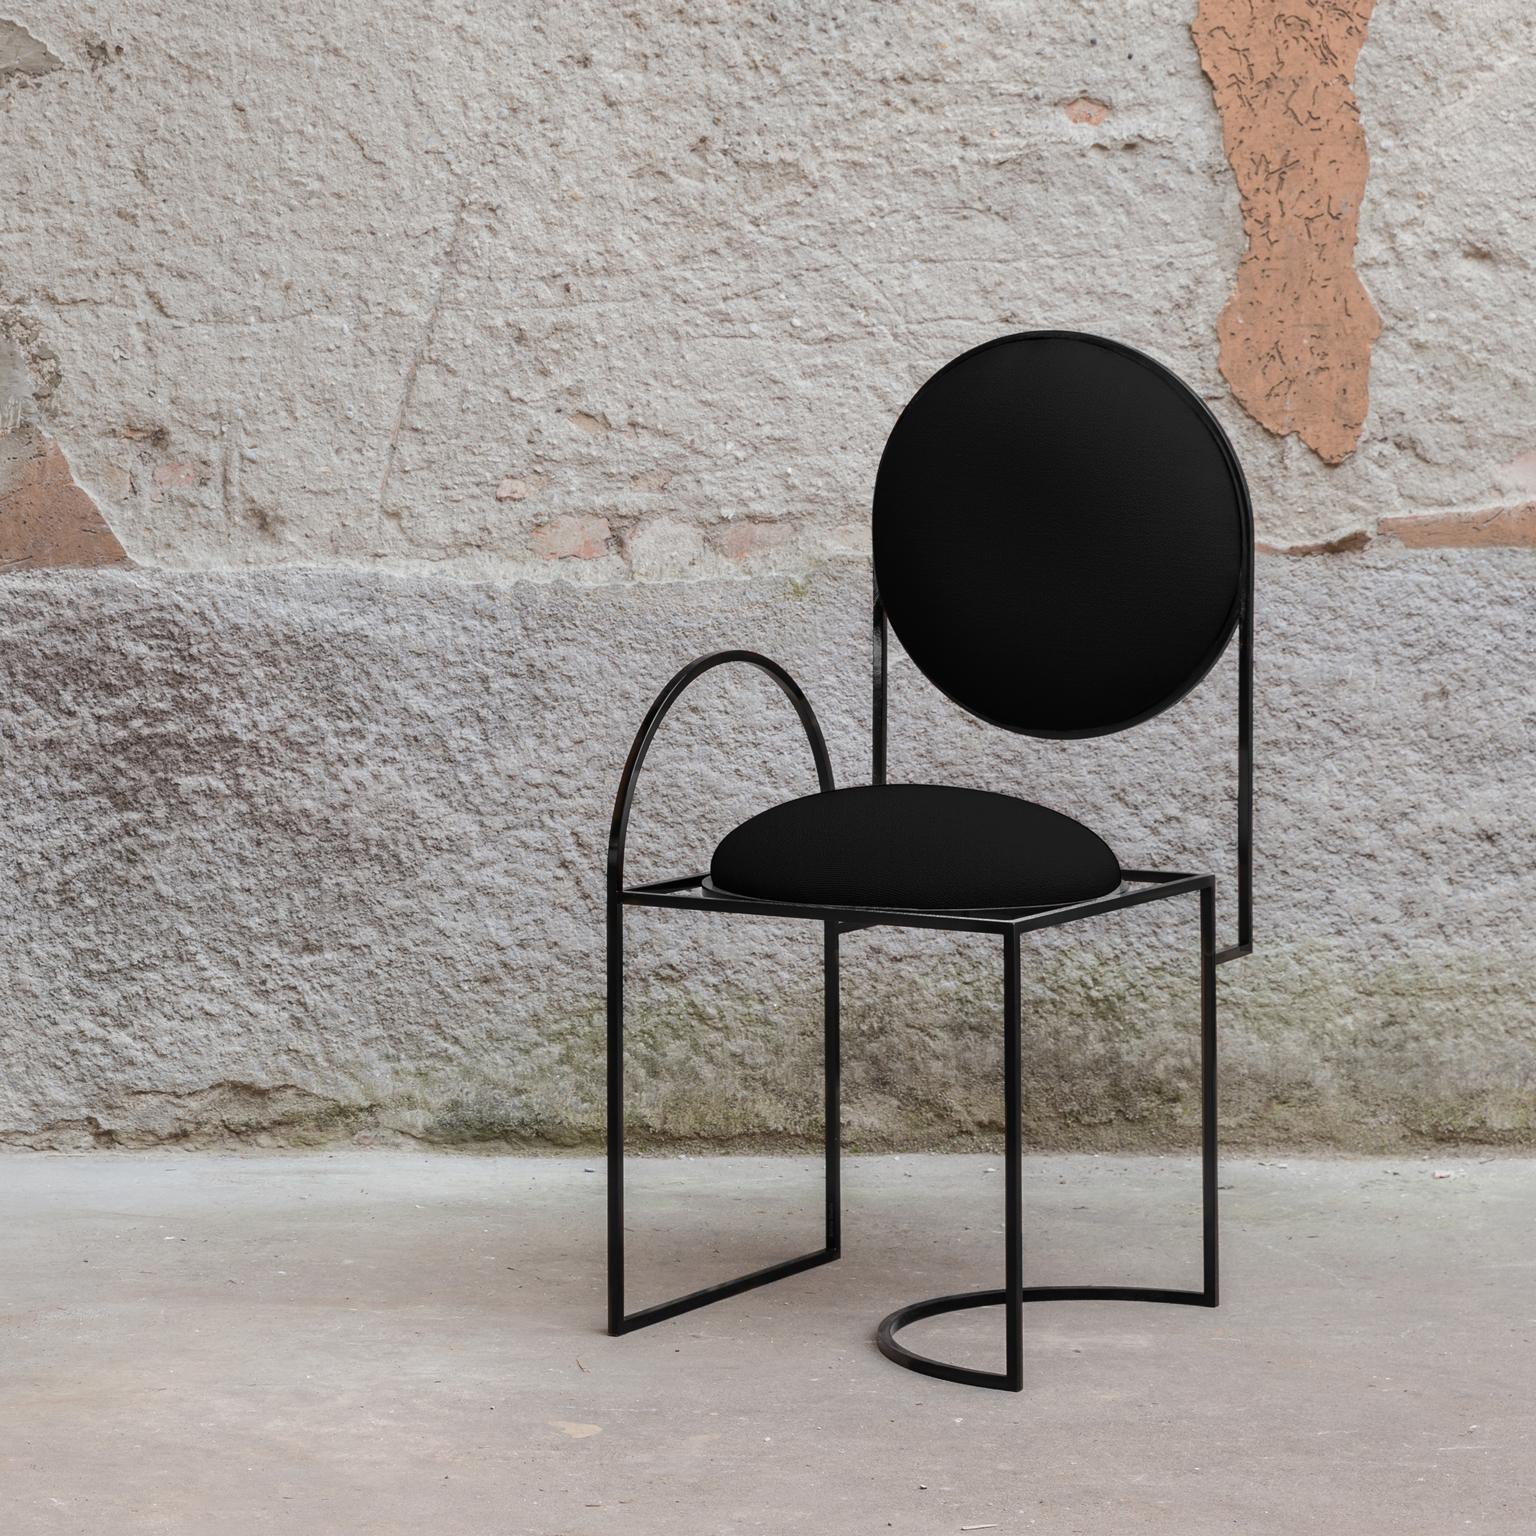 Metalwork Solar Chair in Black Wool and Black Coated Steel Frame, by Lara Bohinc For Sale